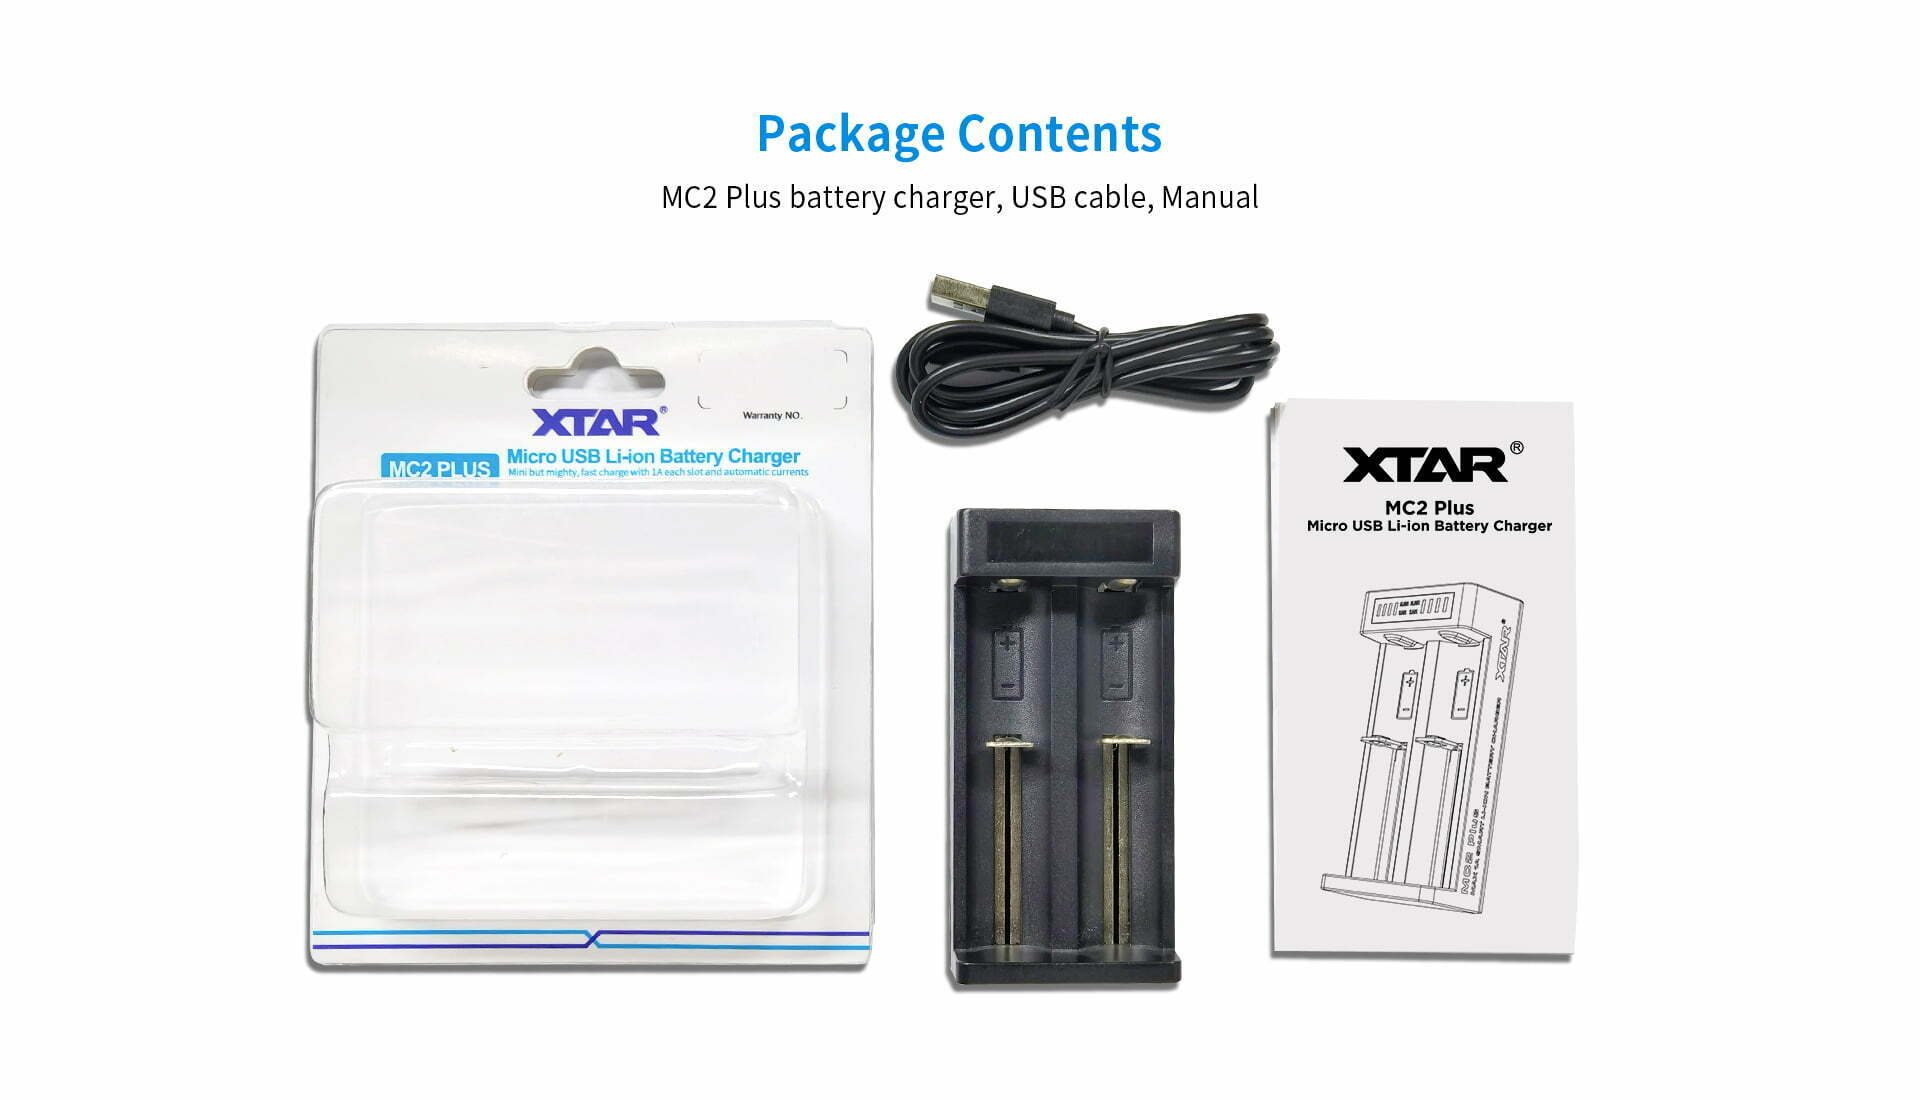 xtar mc2 plus usb 18650 battery charger mantisfpv australia product drones description 10